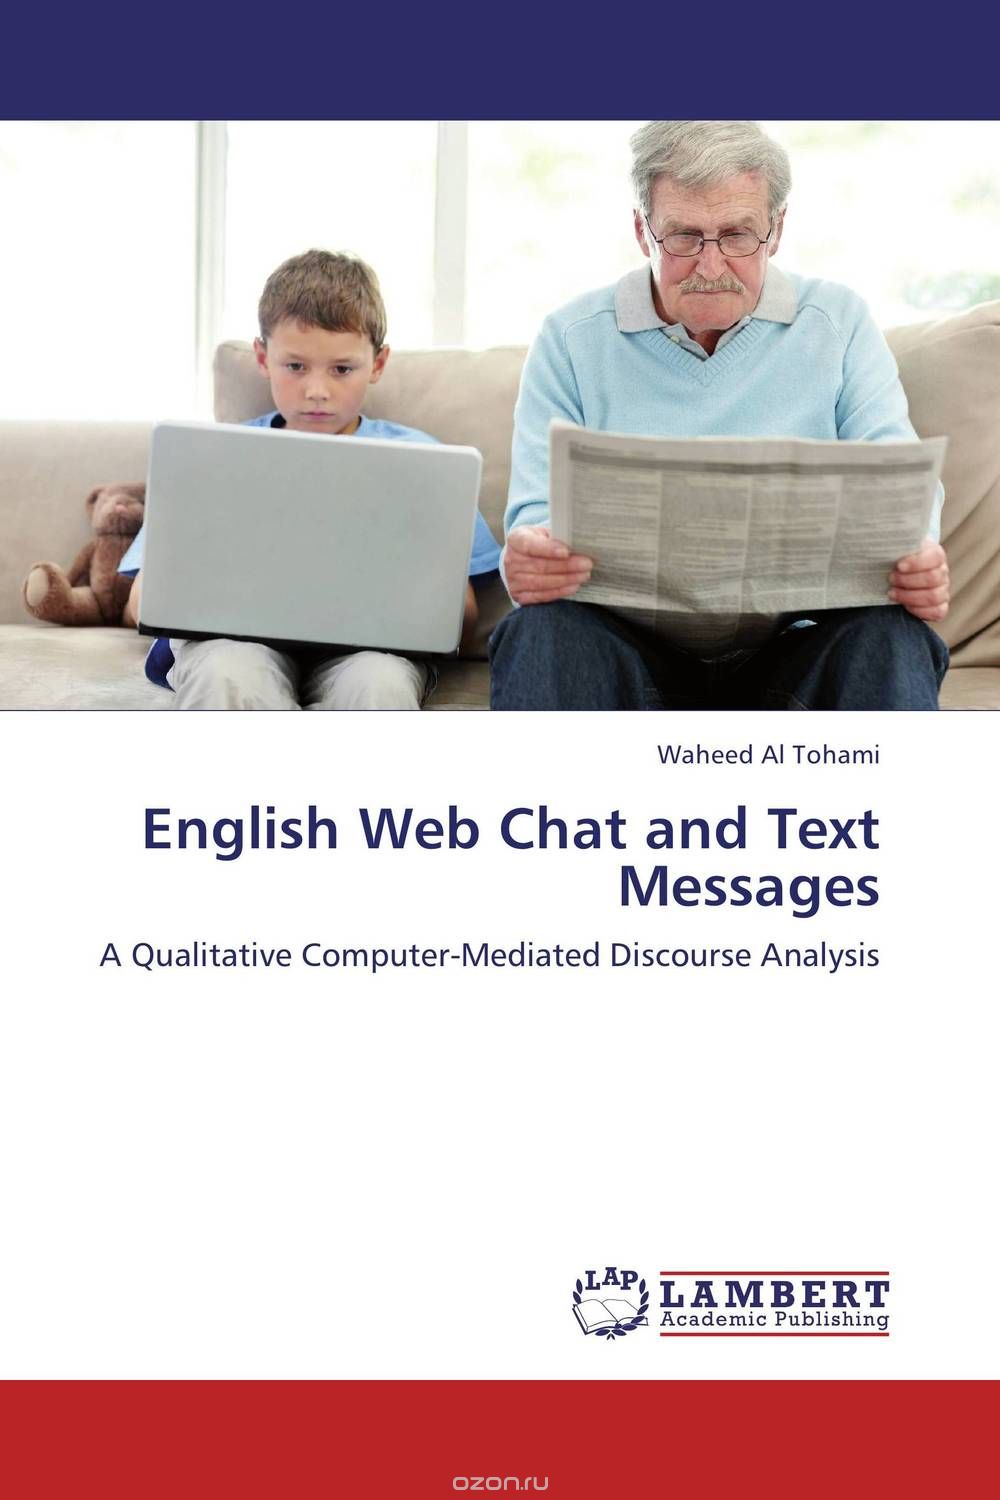 Скачать книгу "English Web Chat and Text Messages"